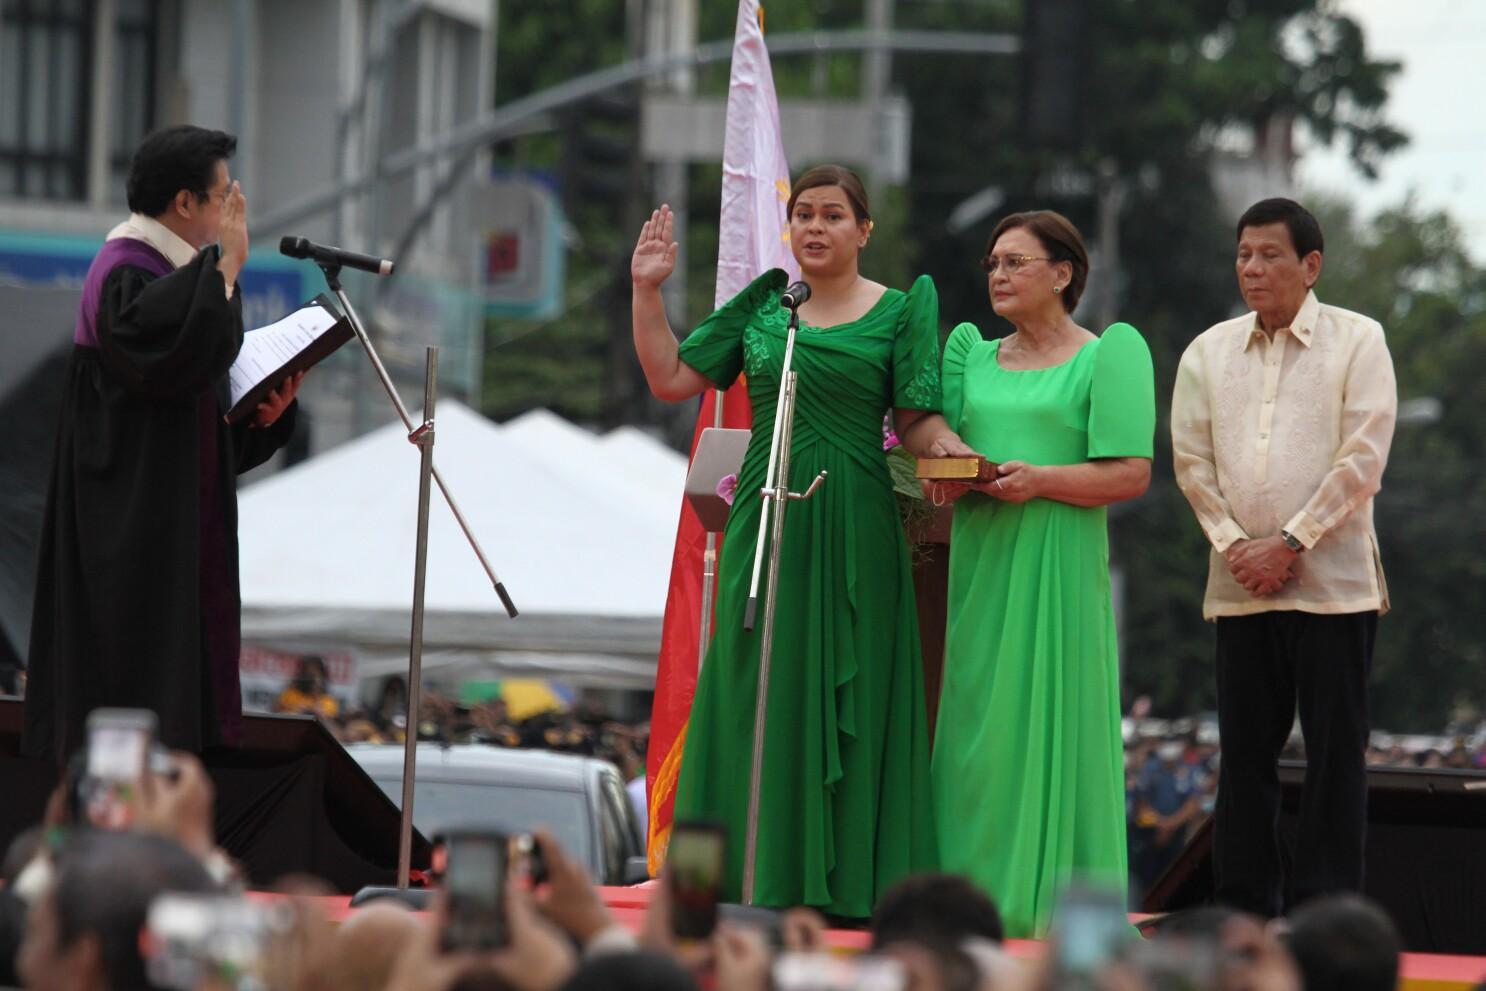 Vice President Sara Duterte was sworn in today in Manila, Philippines.